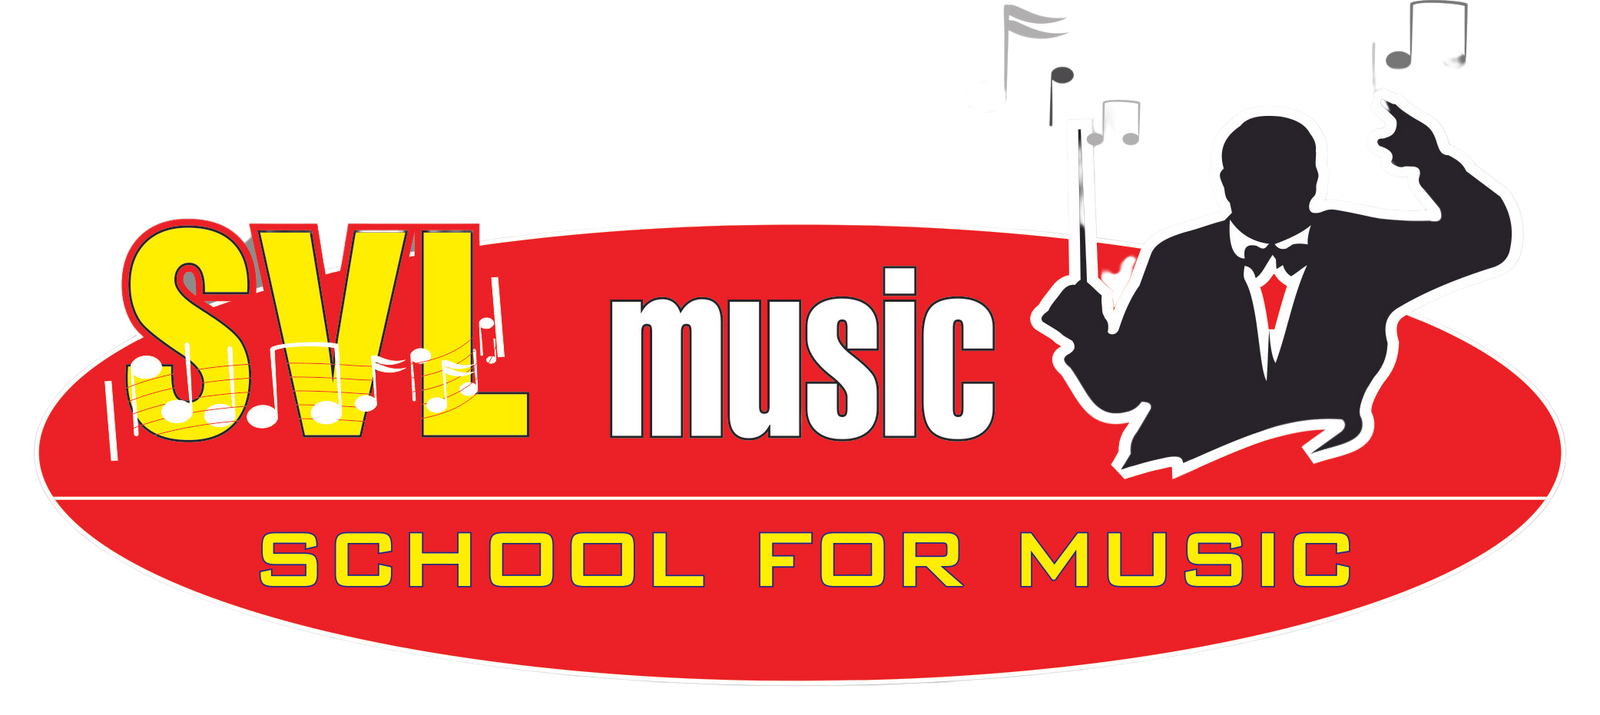 SVL School of music